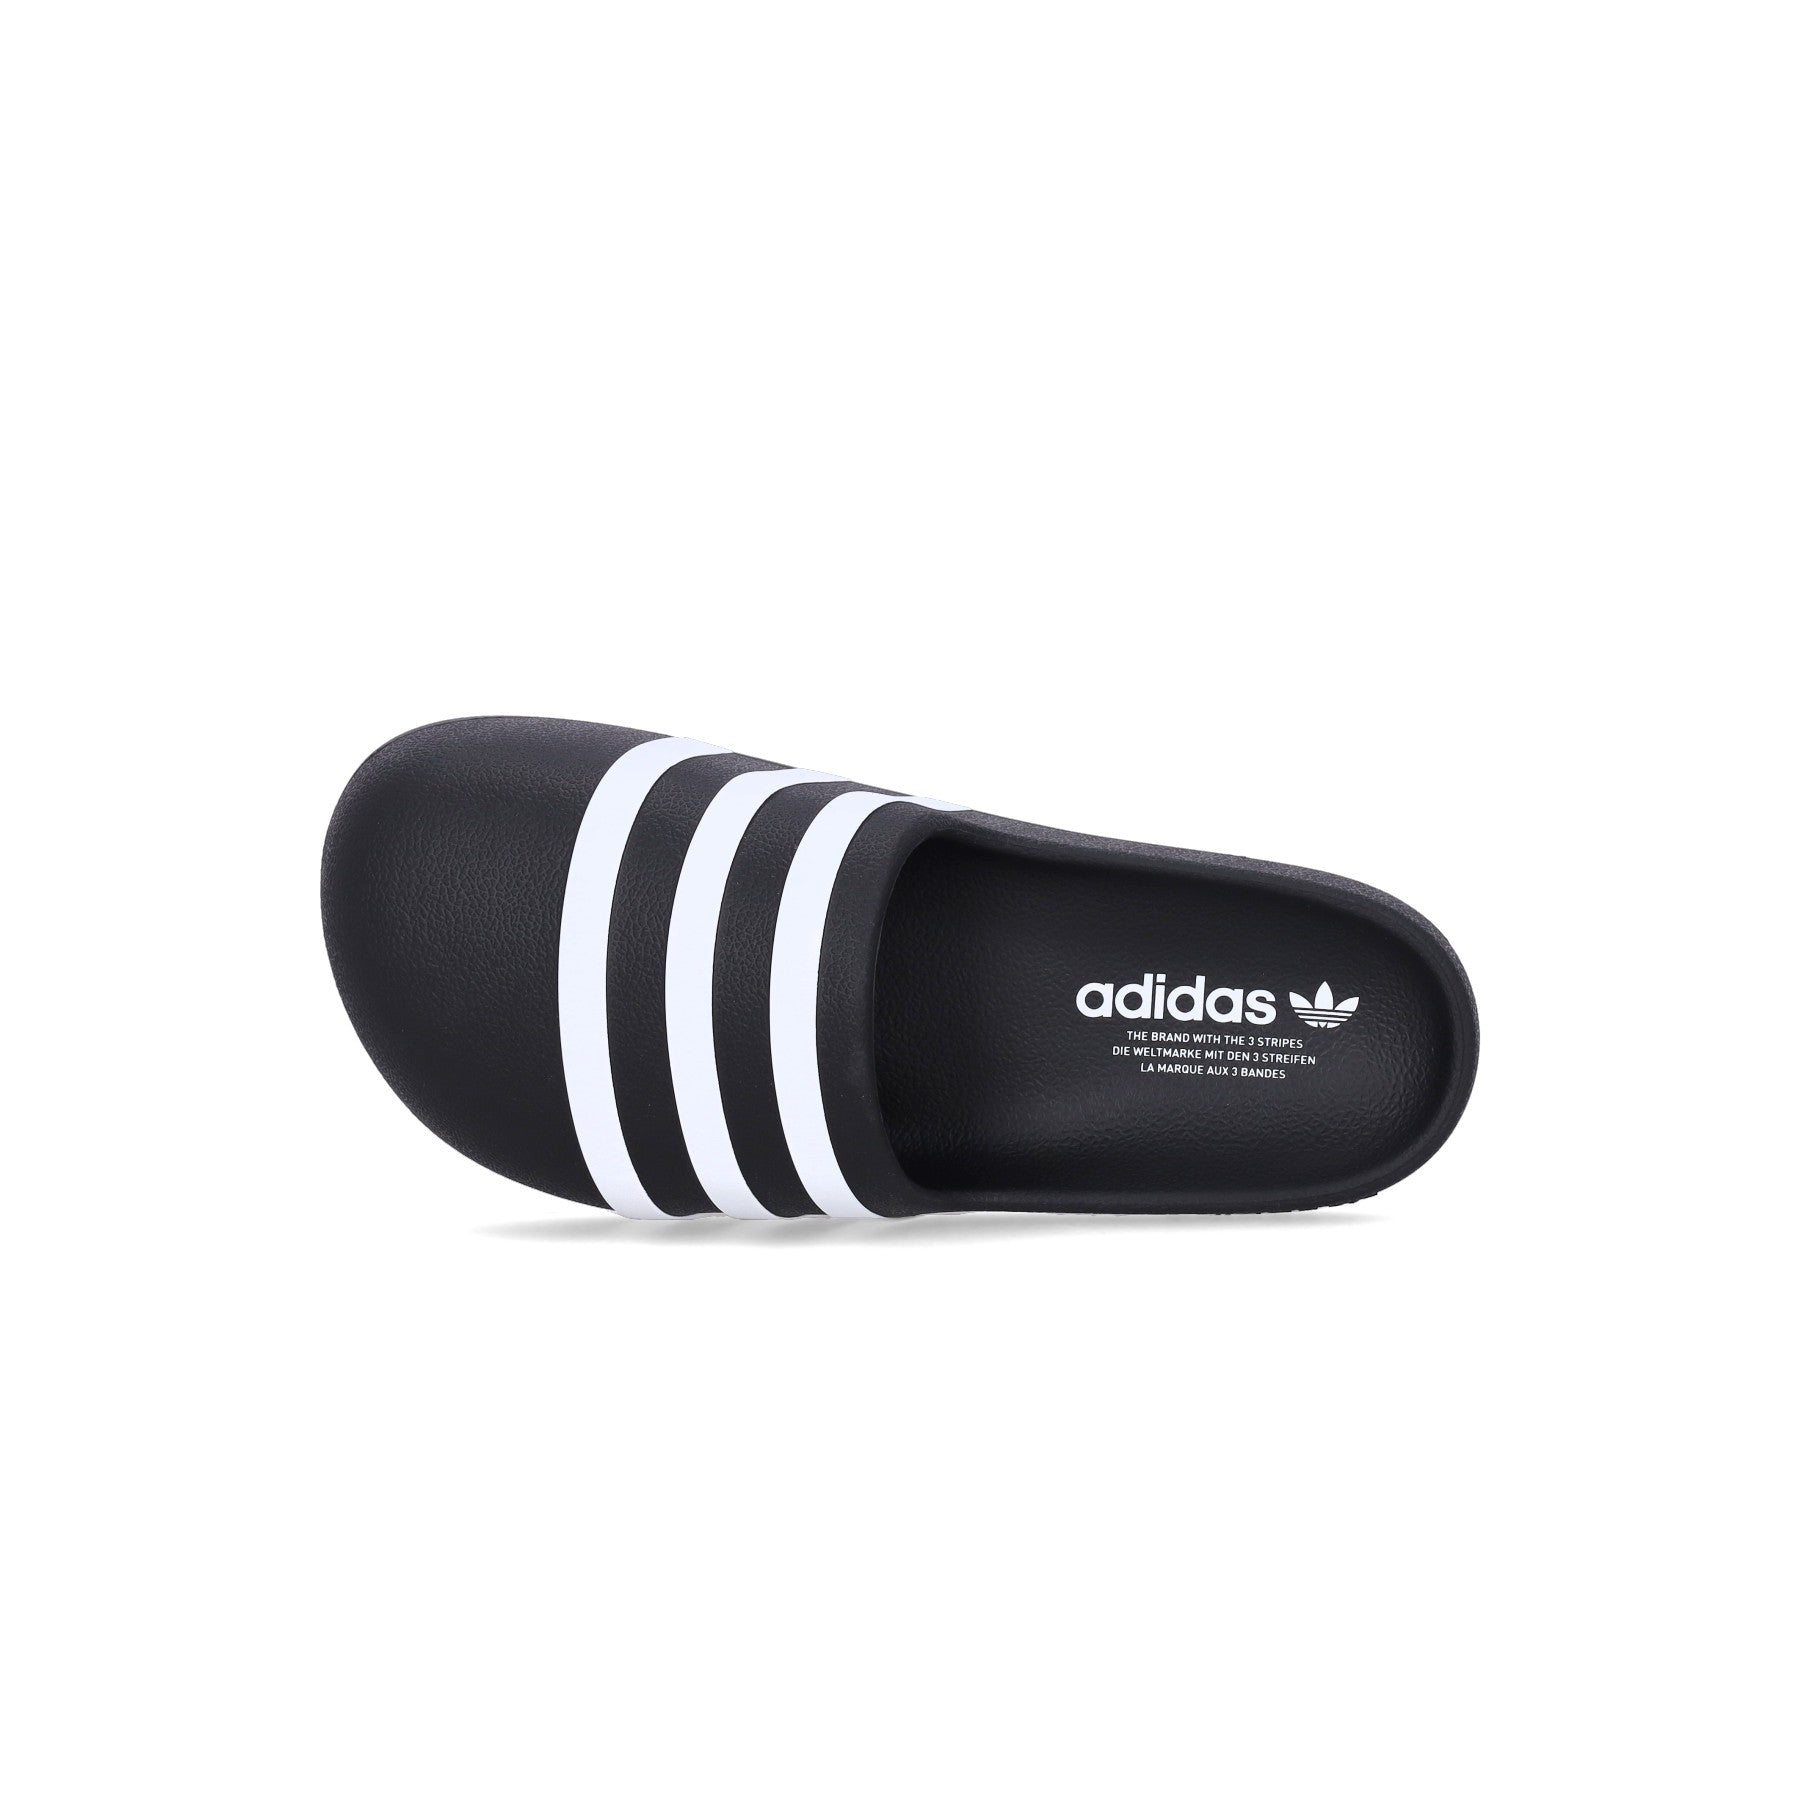 Adidas, Ciabatte Uomo Adifom Adilette, Core Black/cloud White/core Black